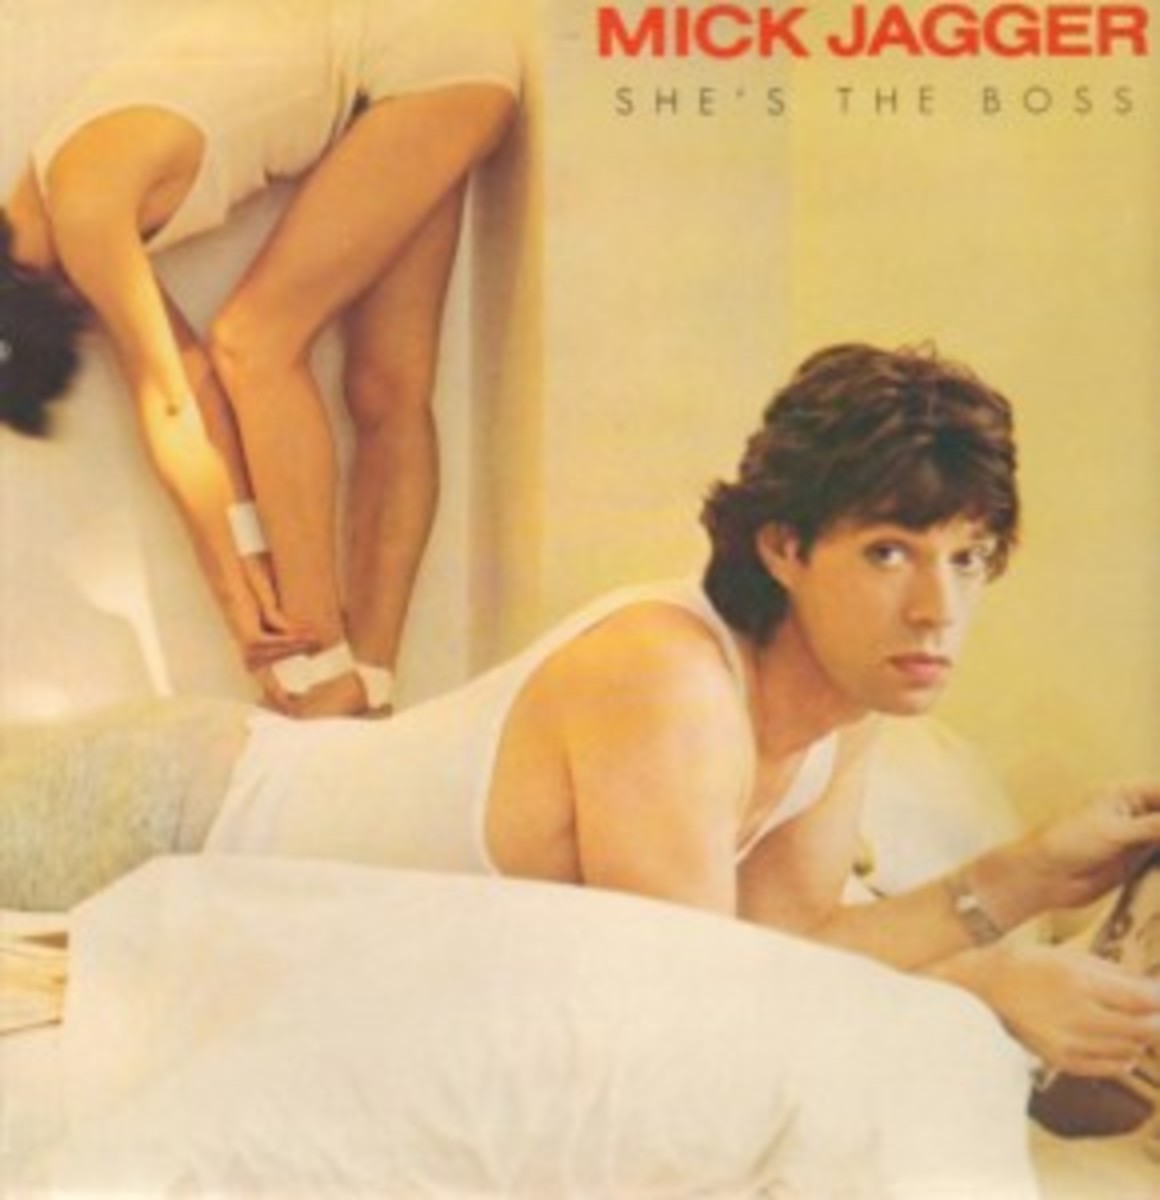 Mick Jagger She's The Boss album